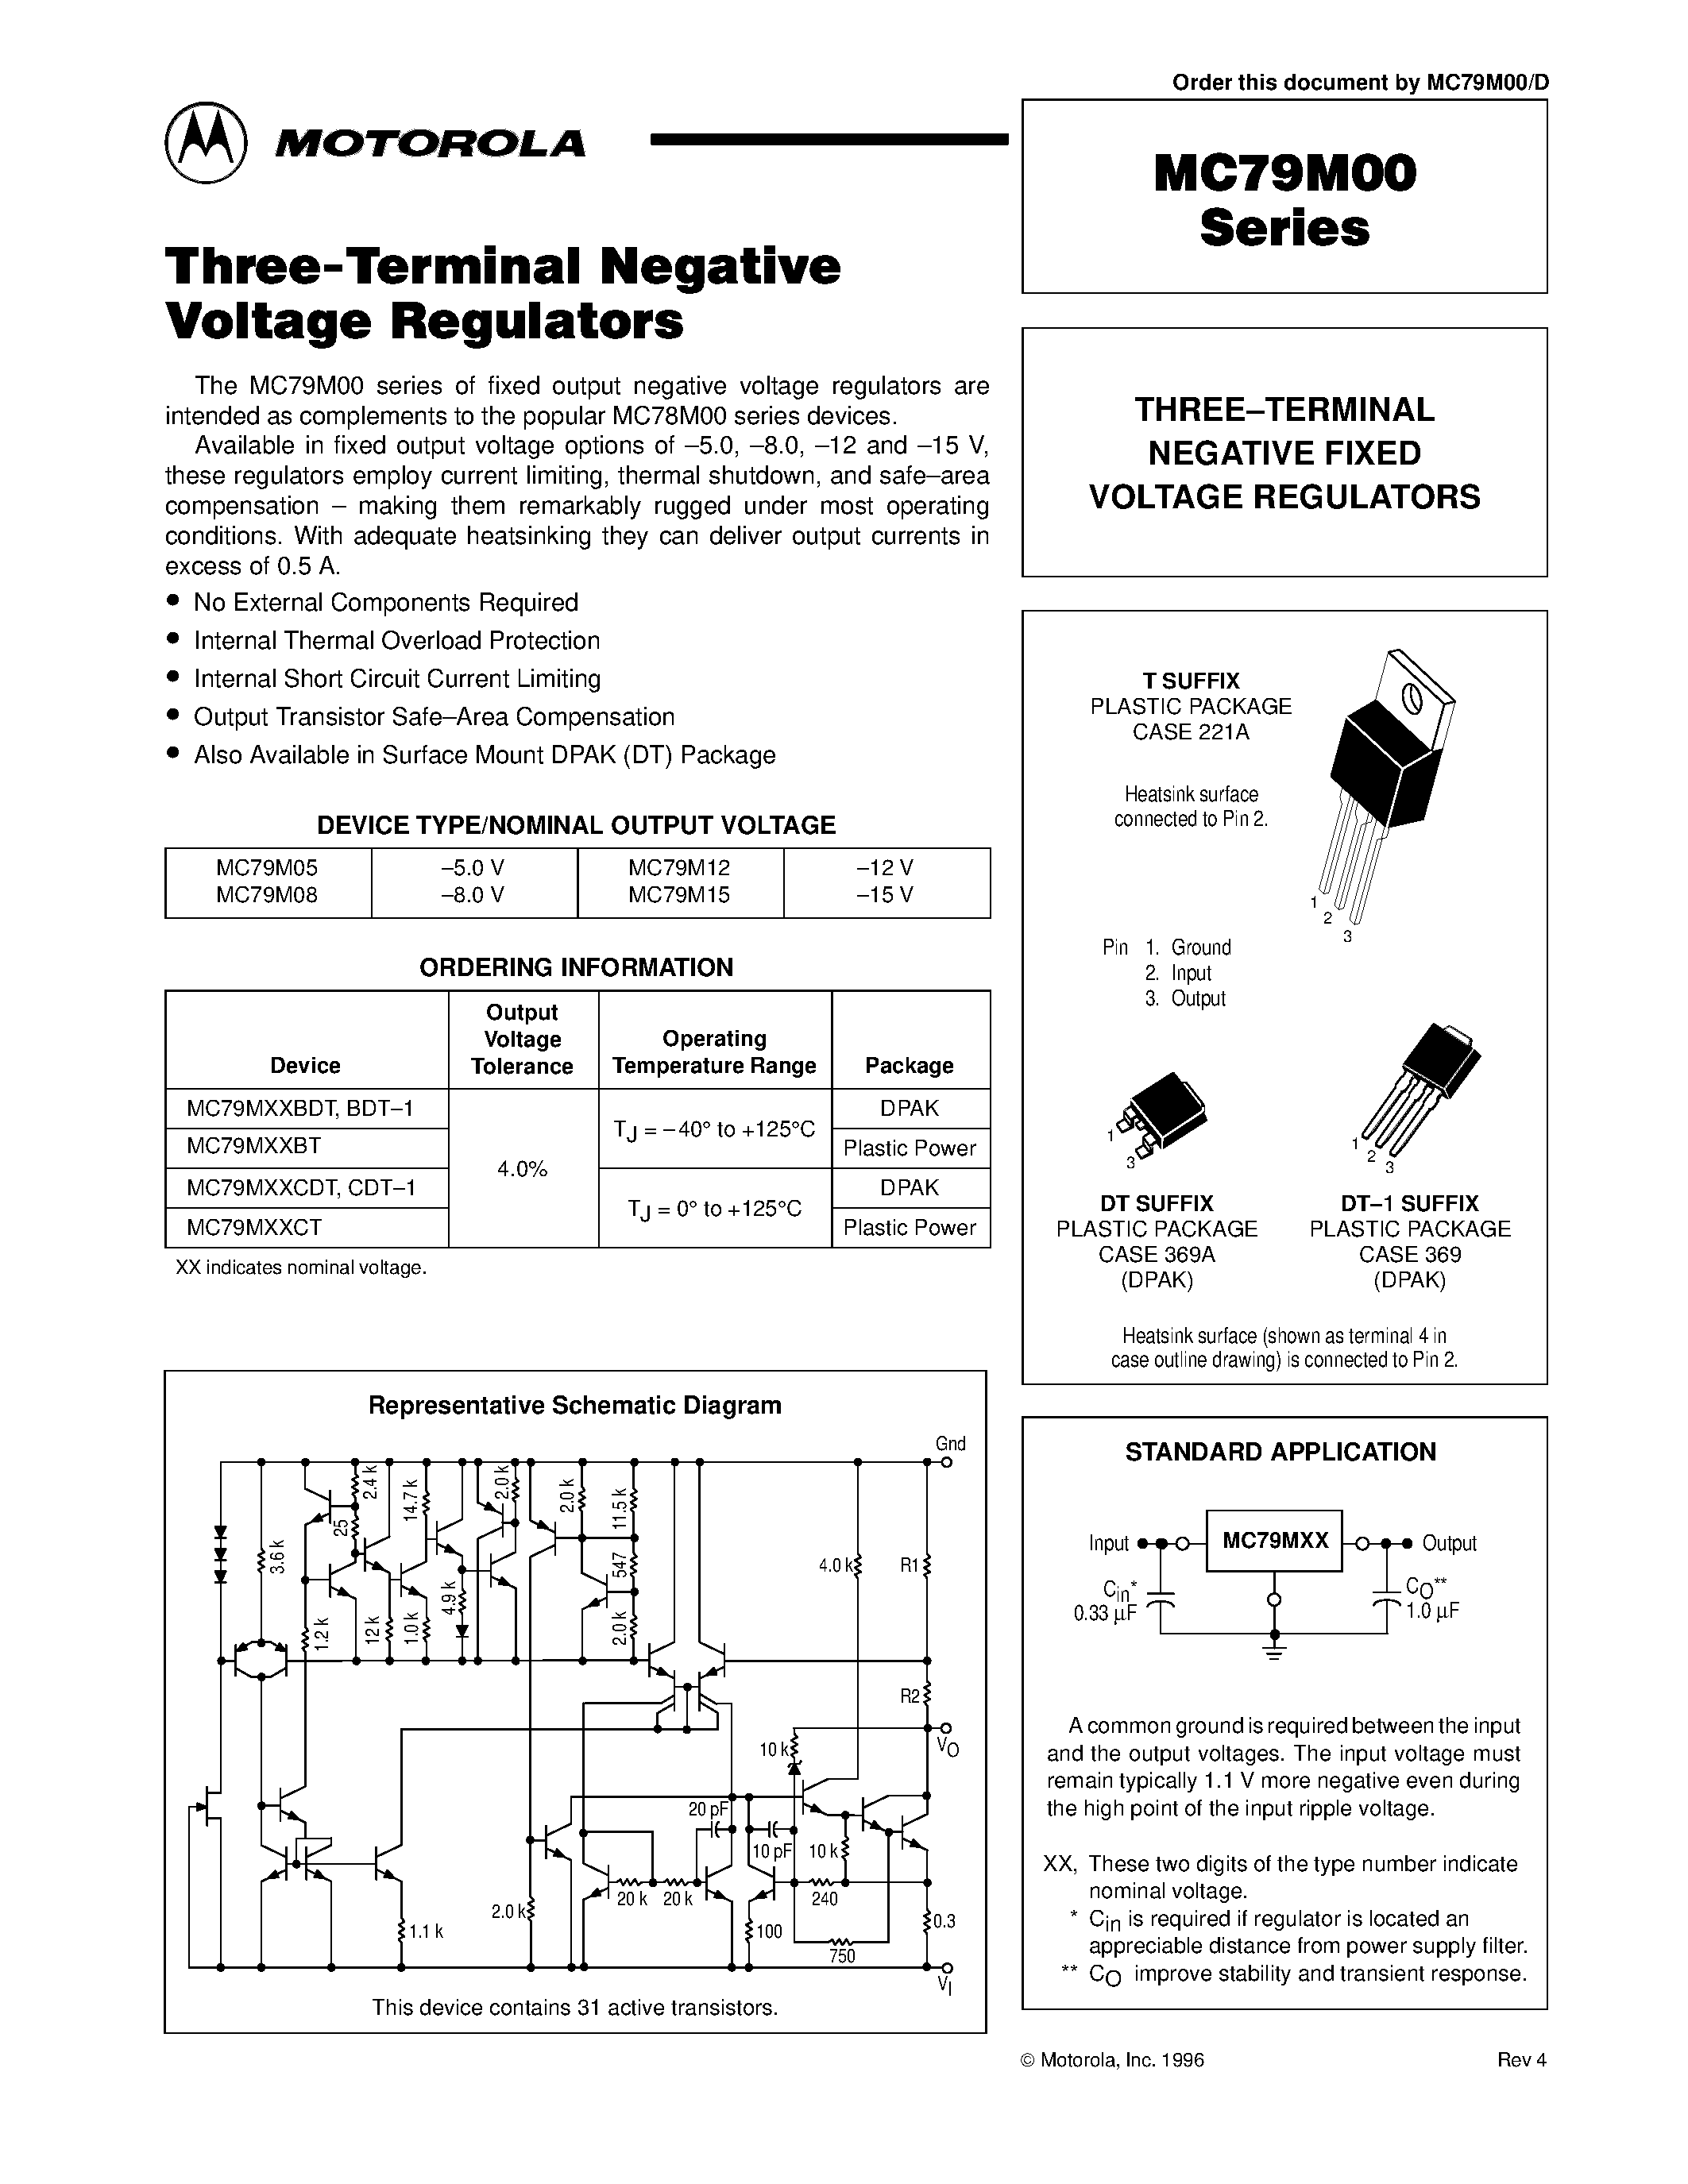 Datasheet MC79M15 - THREE-TERMINAL NEGATIVE FIXED VOLTAGE REGULATORS page 1